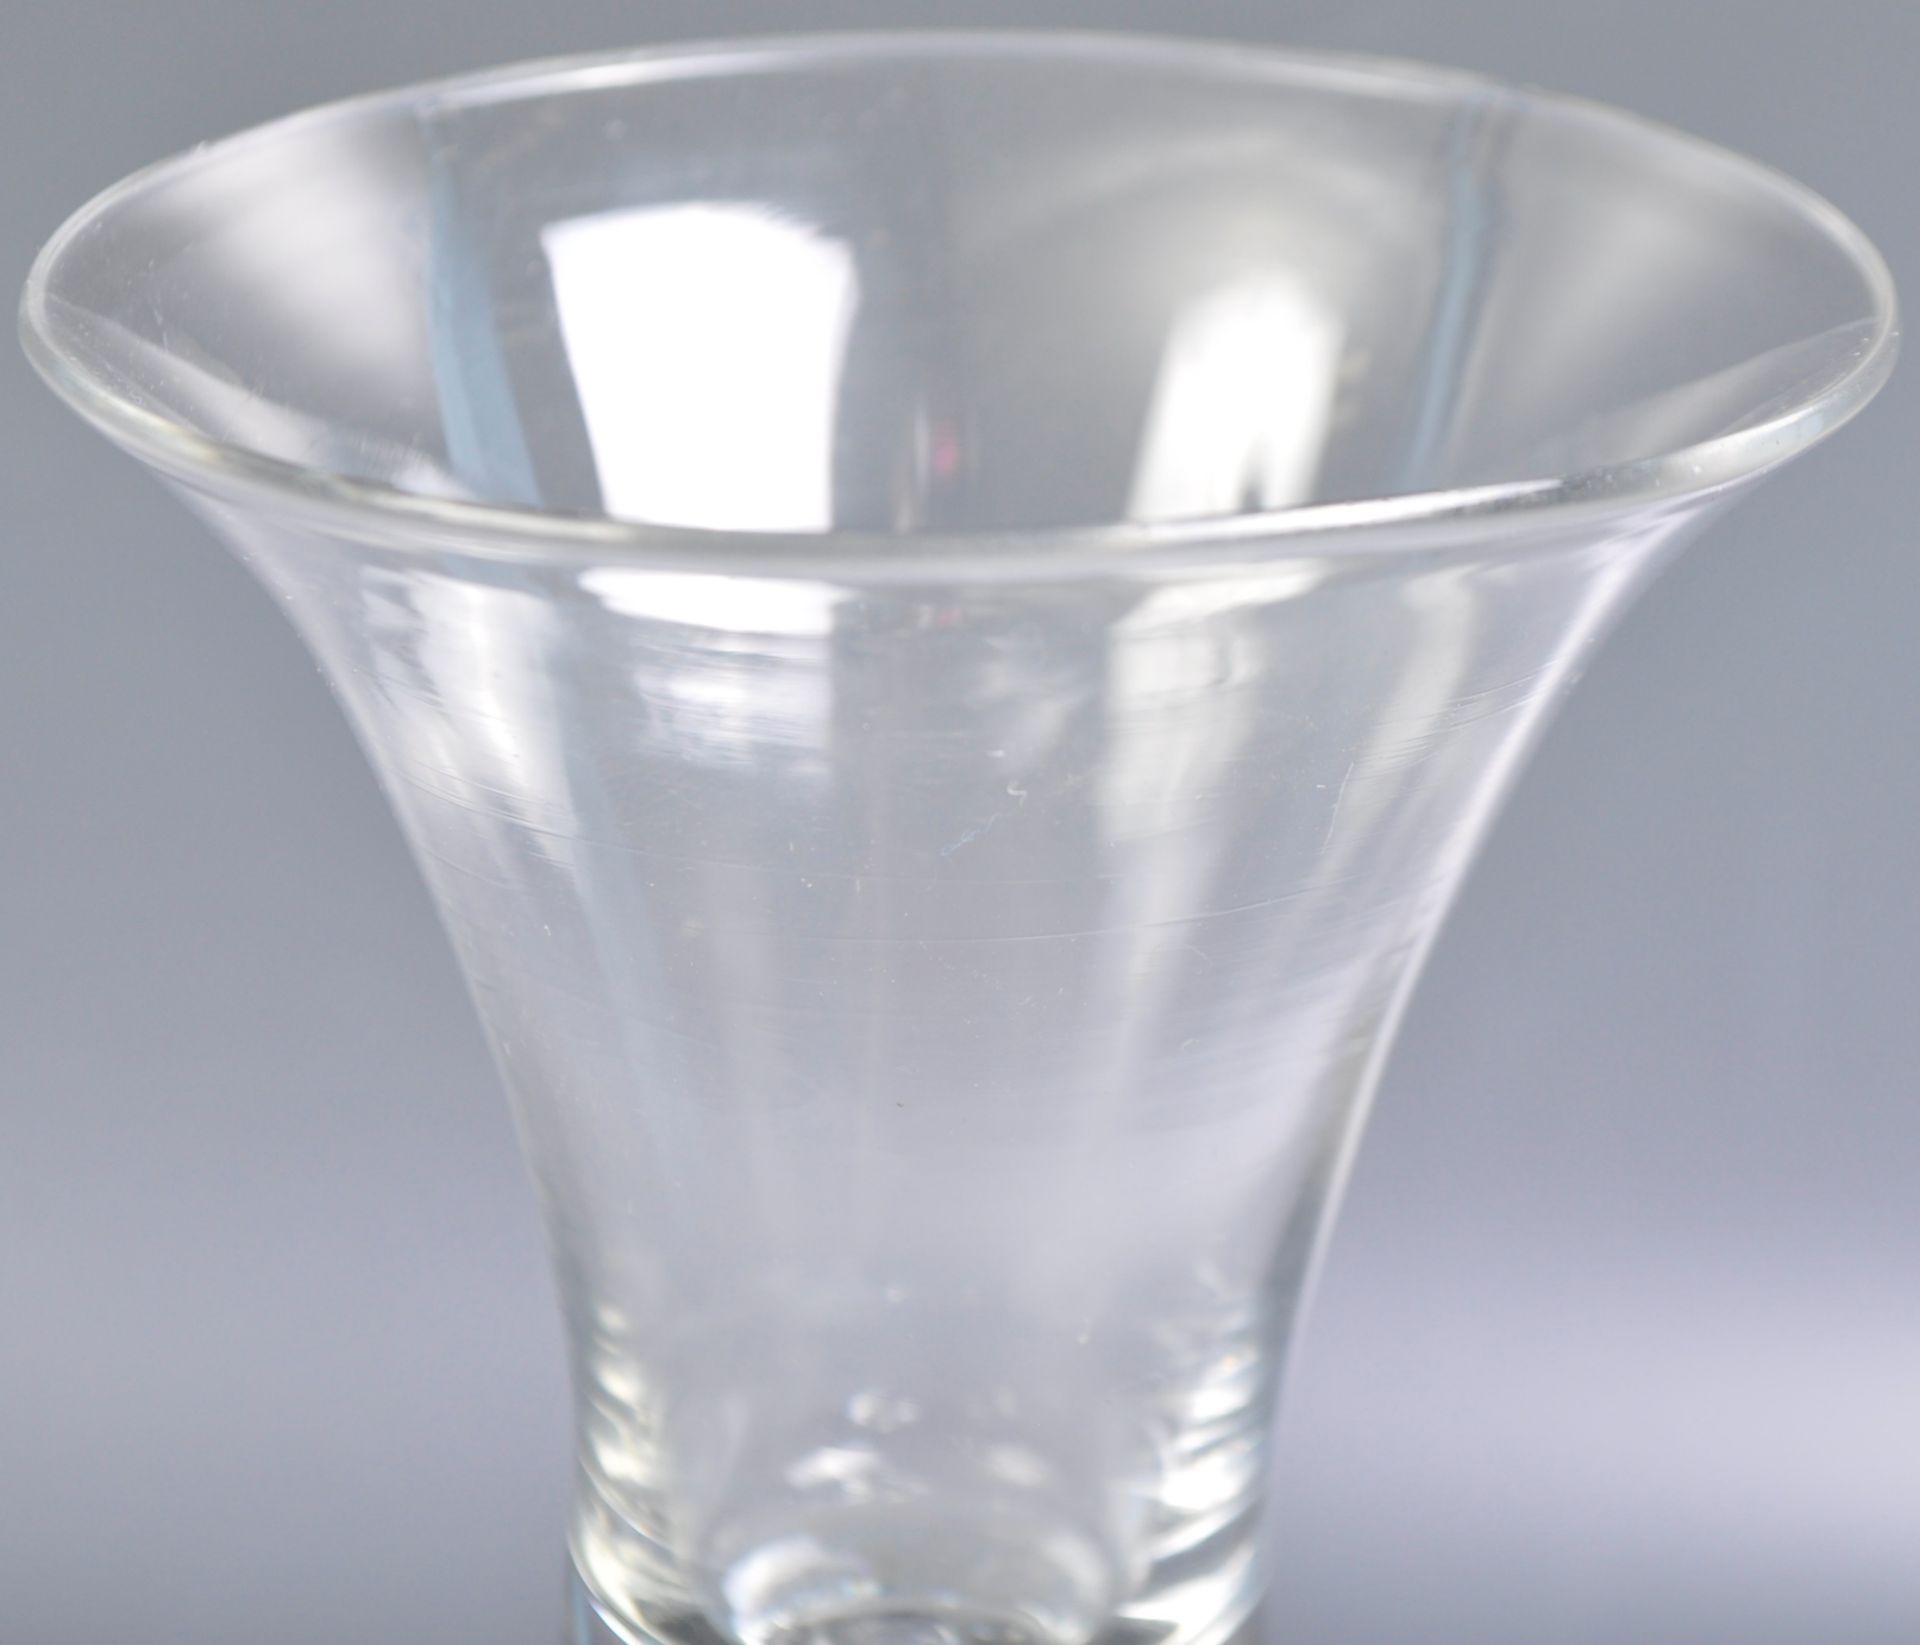 ANTIQUE 18TH CENTURY GEORGIAN PLAIN STEM WINE GLASS - Image 5 of 5